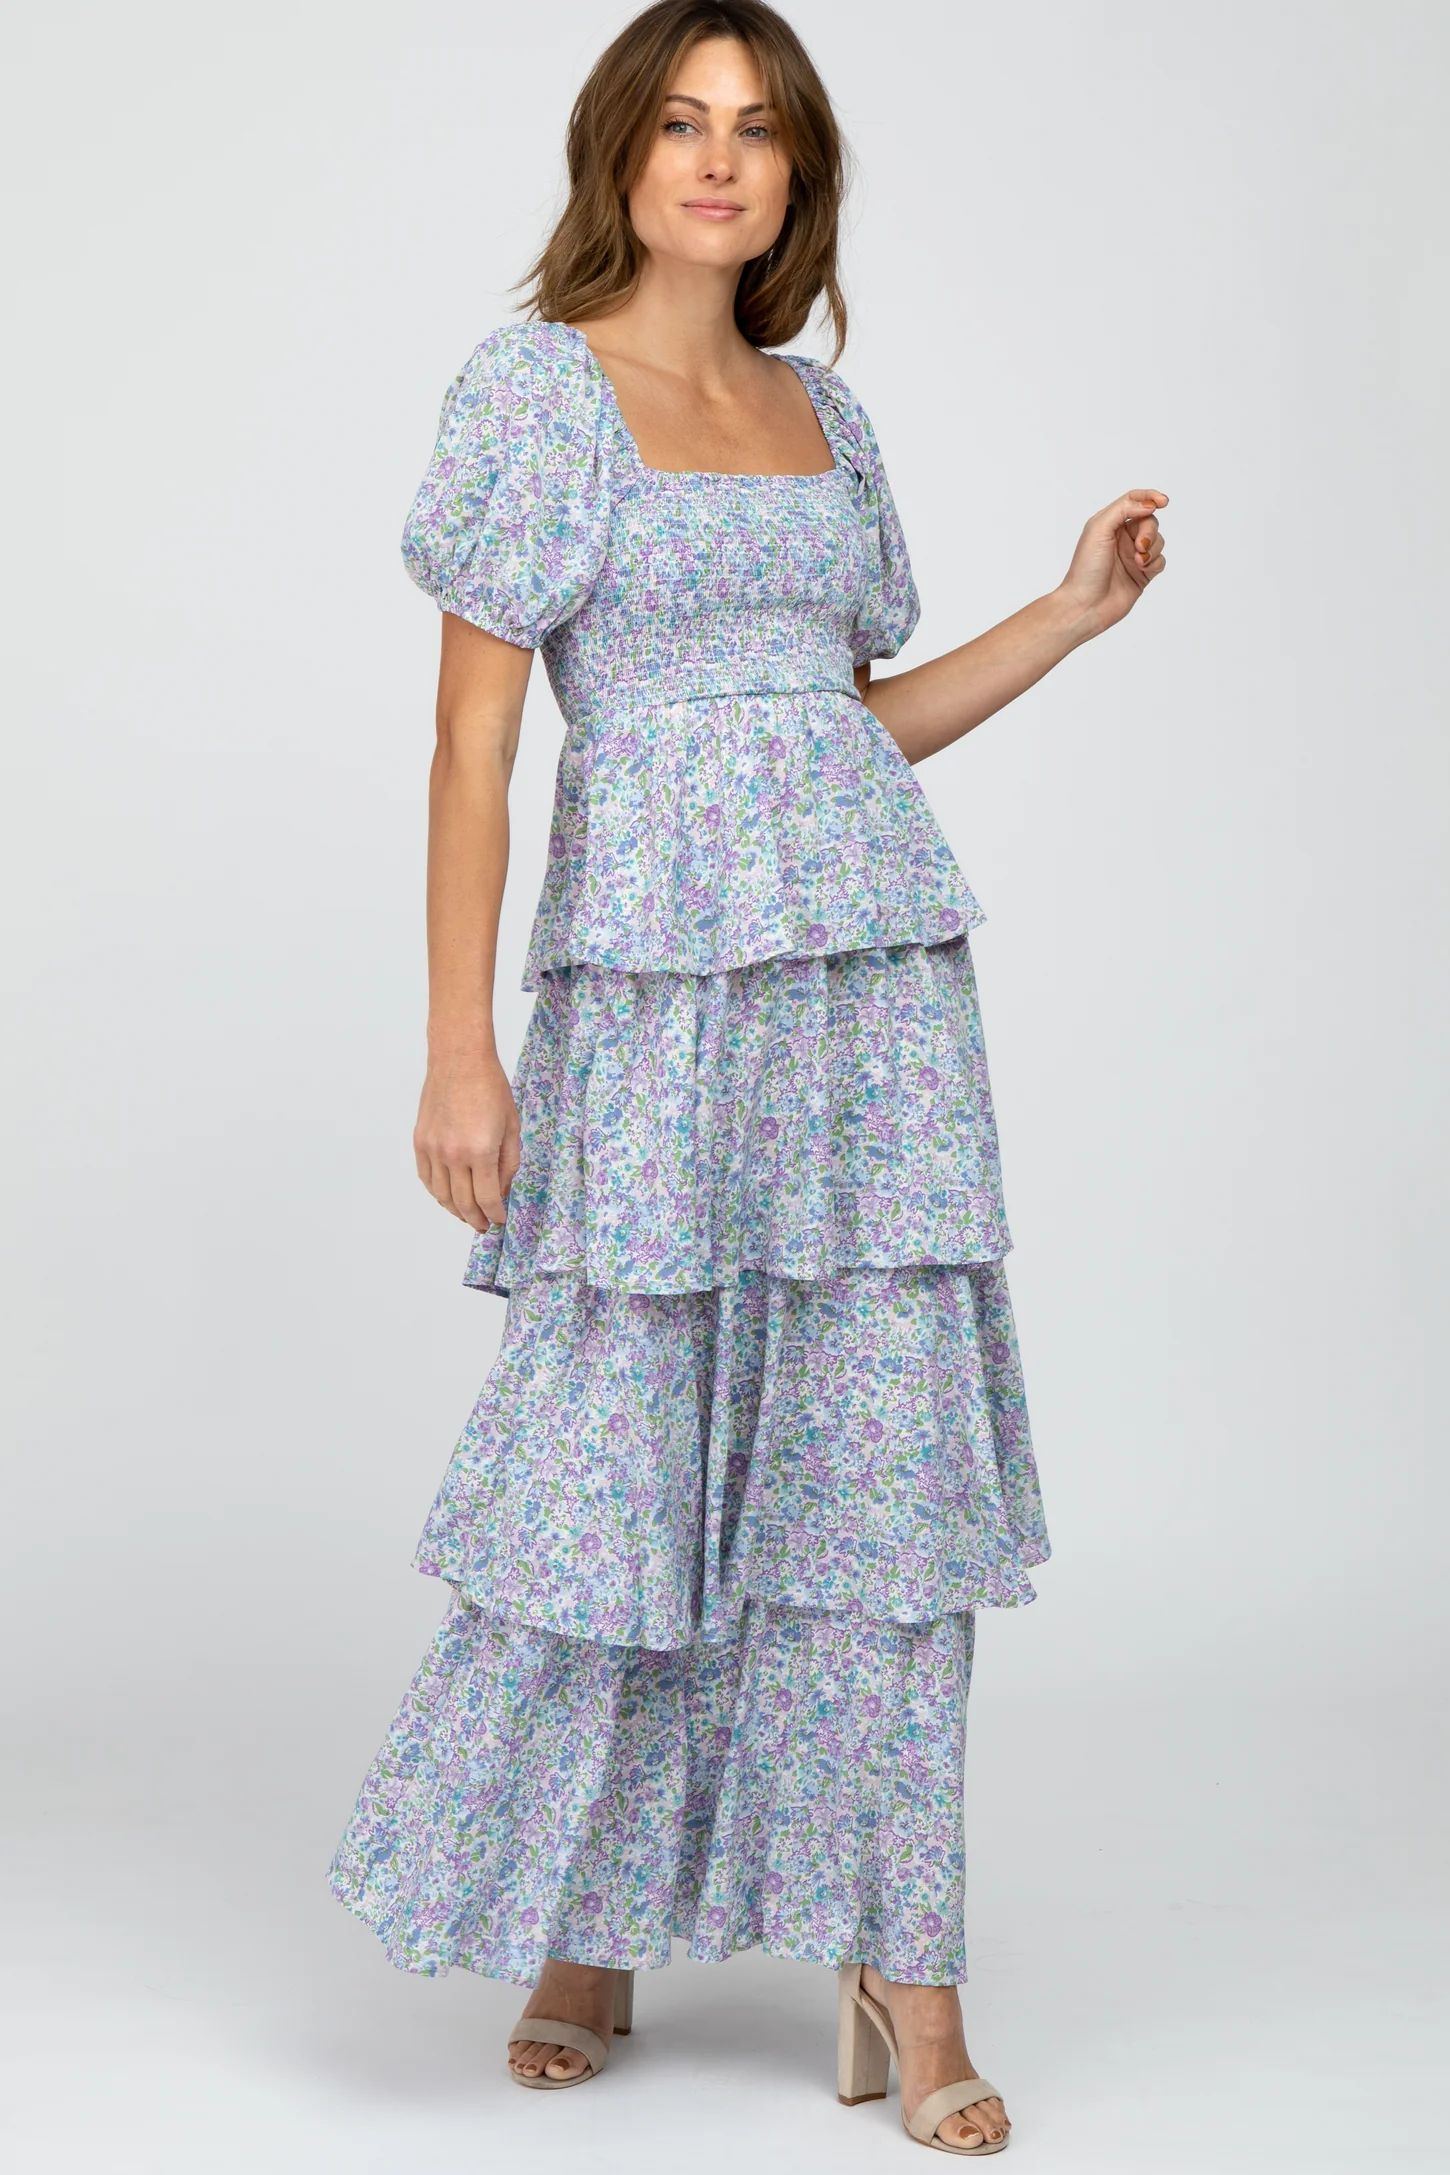 Blue Floral Square Neck Ruffle Layered Maxi Dress | PinkBlush Maternity